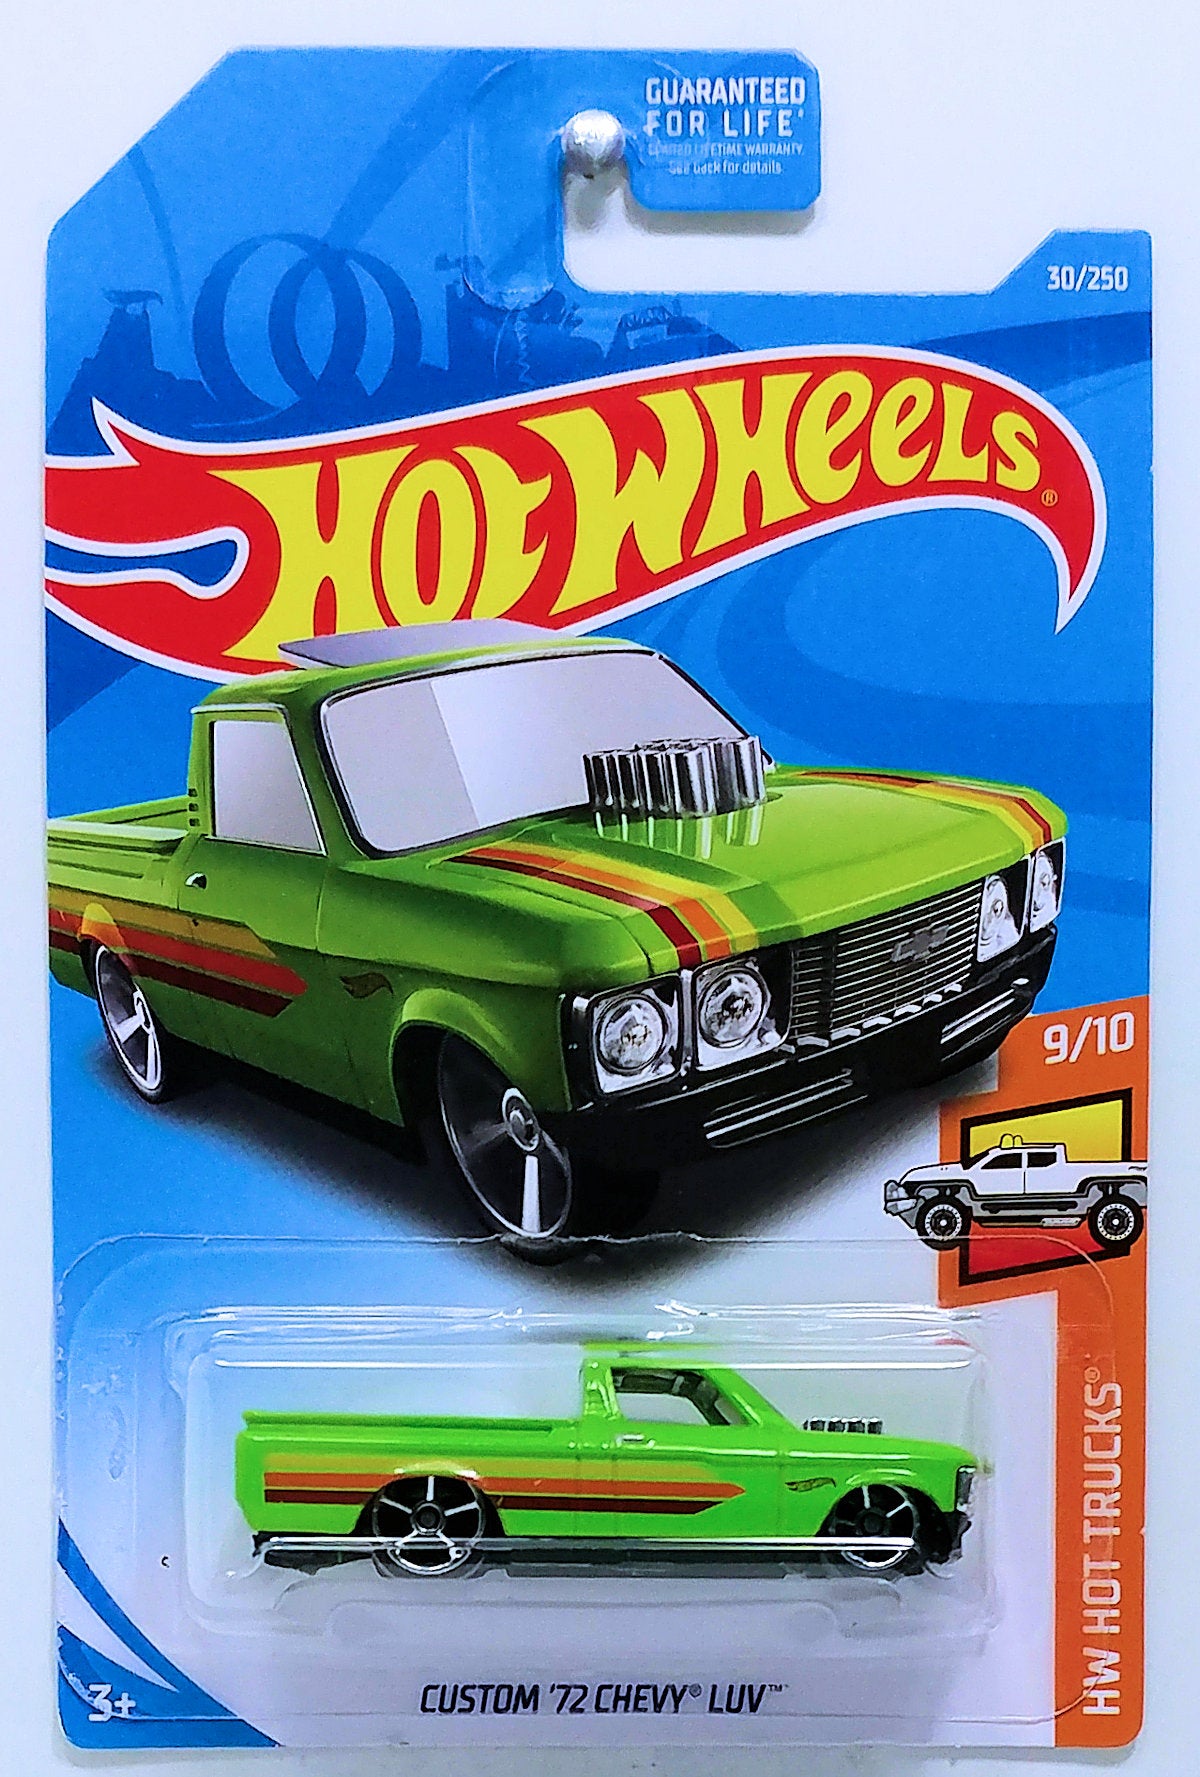 Hot Wheels 2019 - Collector # 030/250 - HW Hot Trucks 9/10 - Custom '72 Chevy LUV - Green - USA